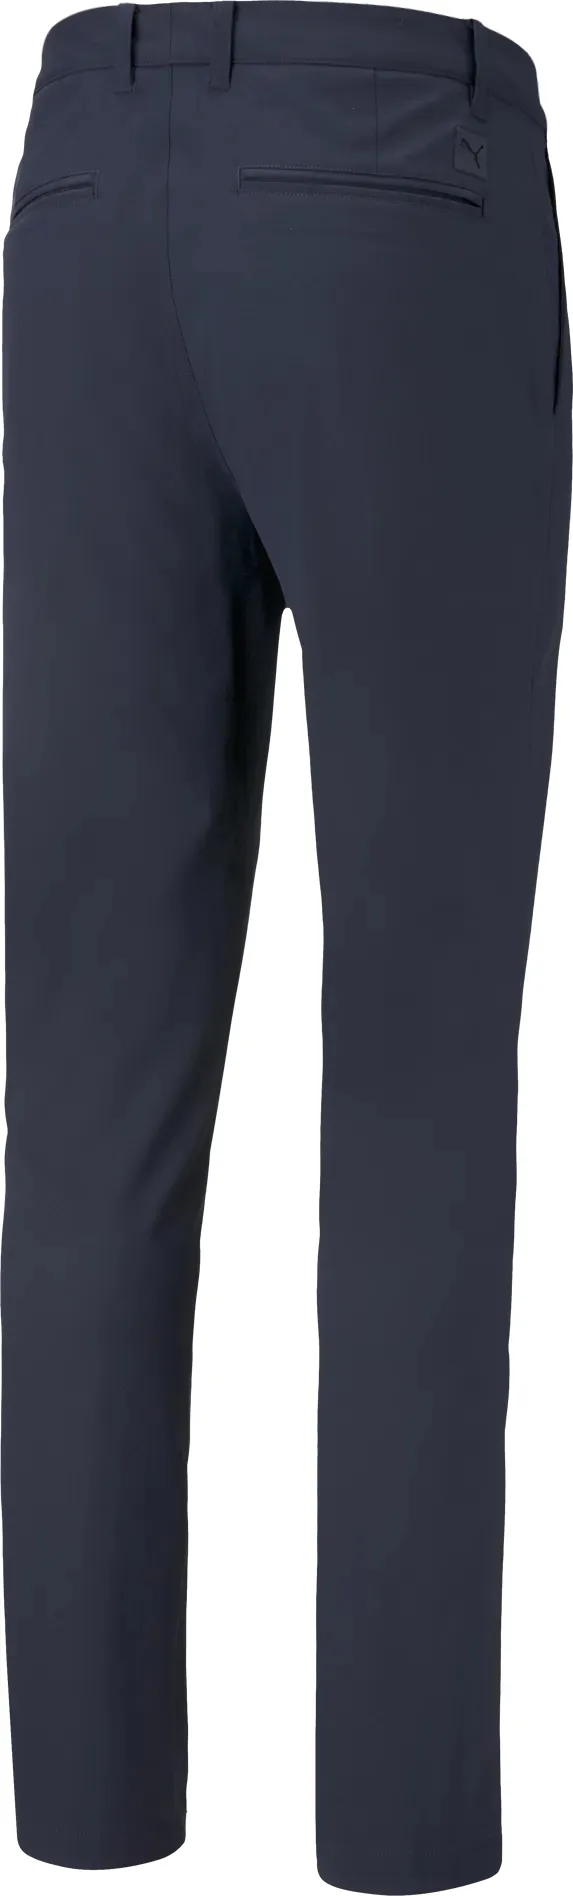 Puma Dealer Tailored-Fit Golfhose, dunkelblau